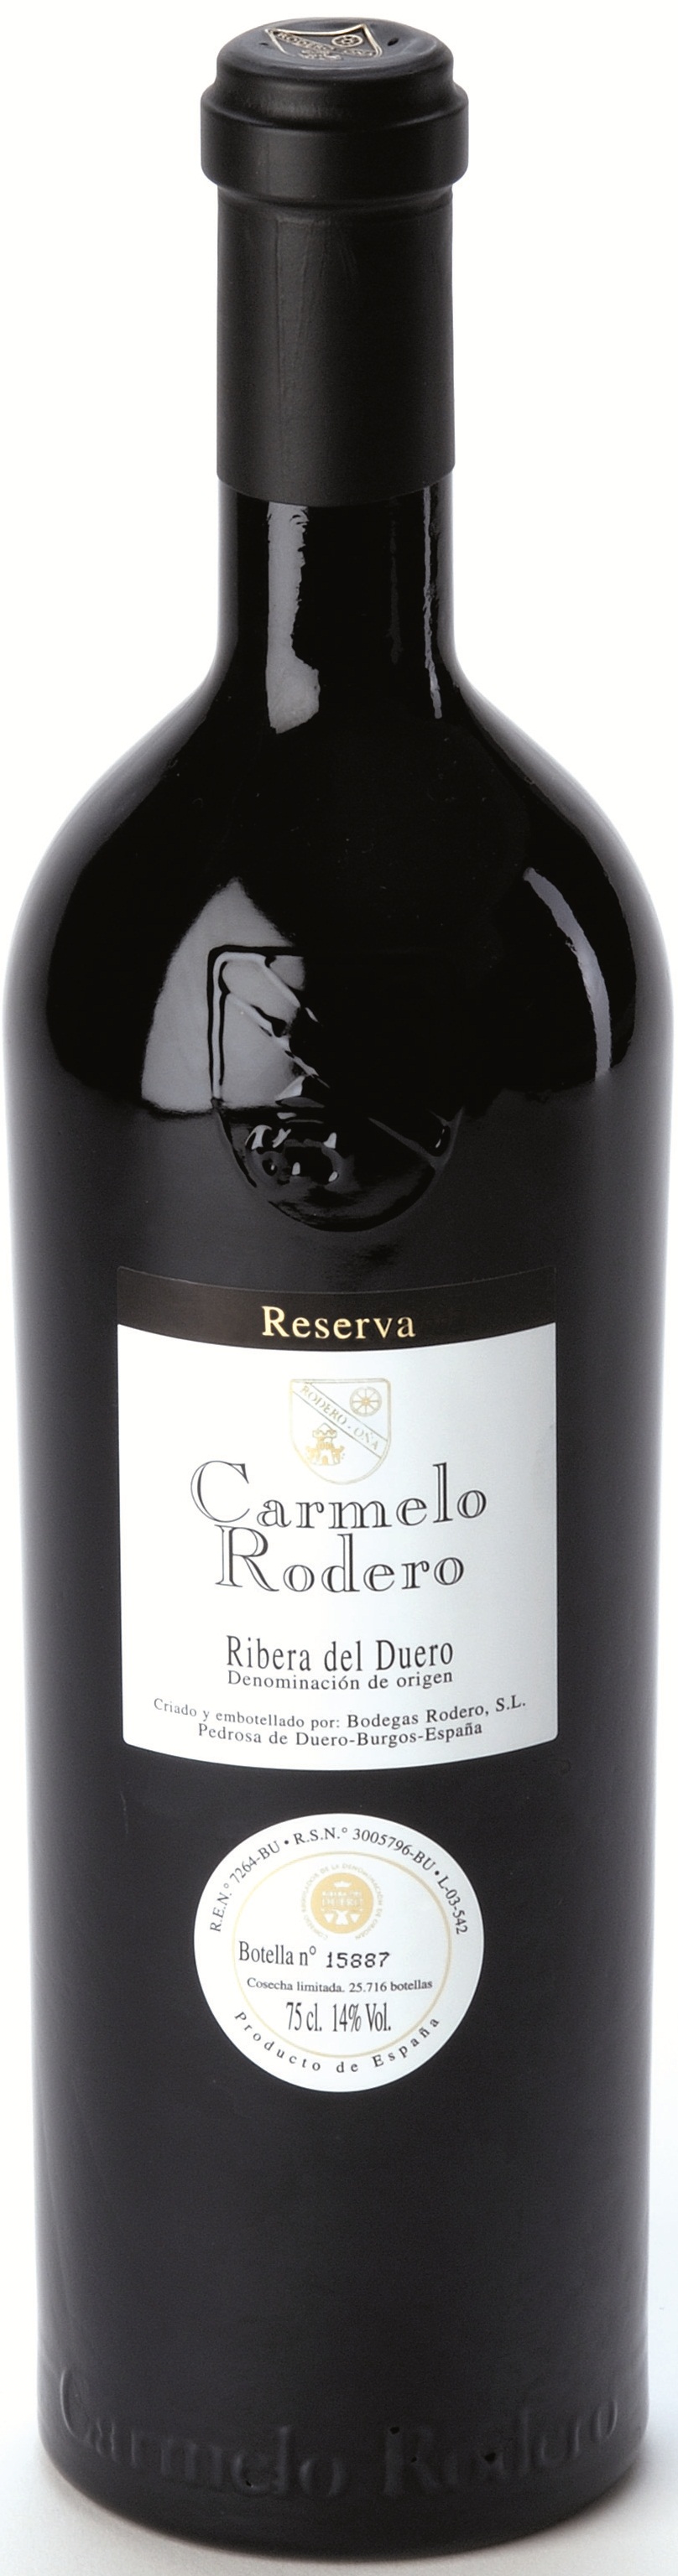 Imagen de la botella de Vino Carmelo Rodero Reserva